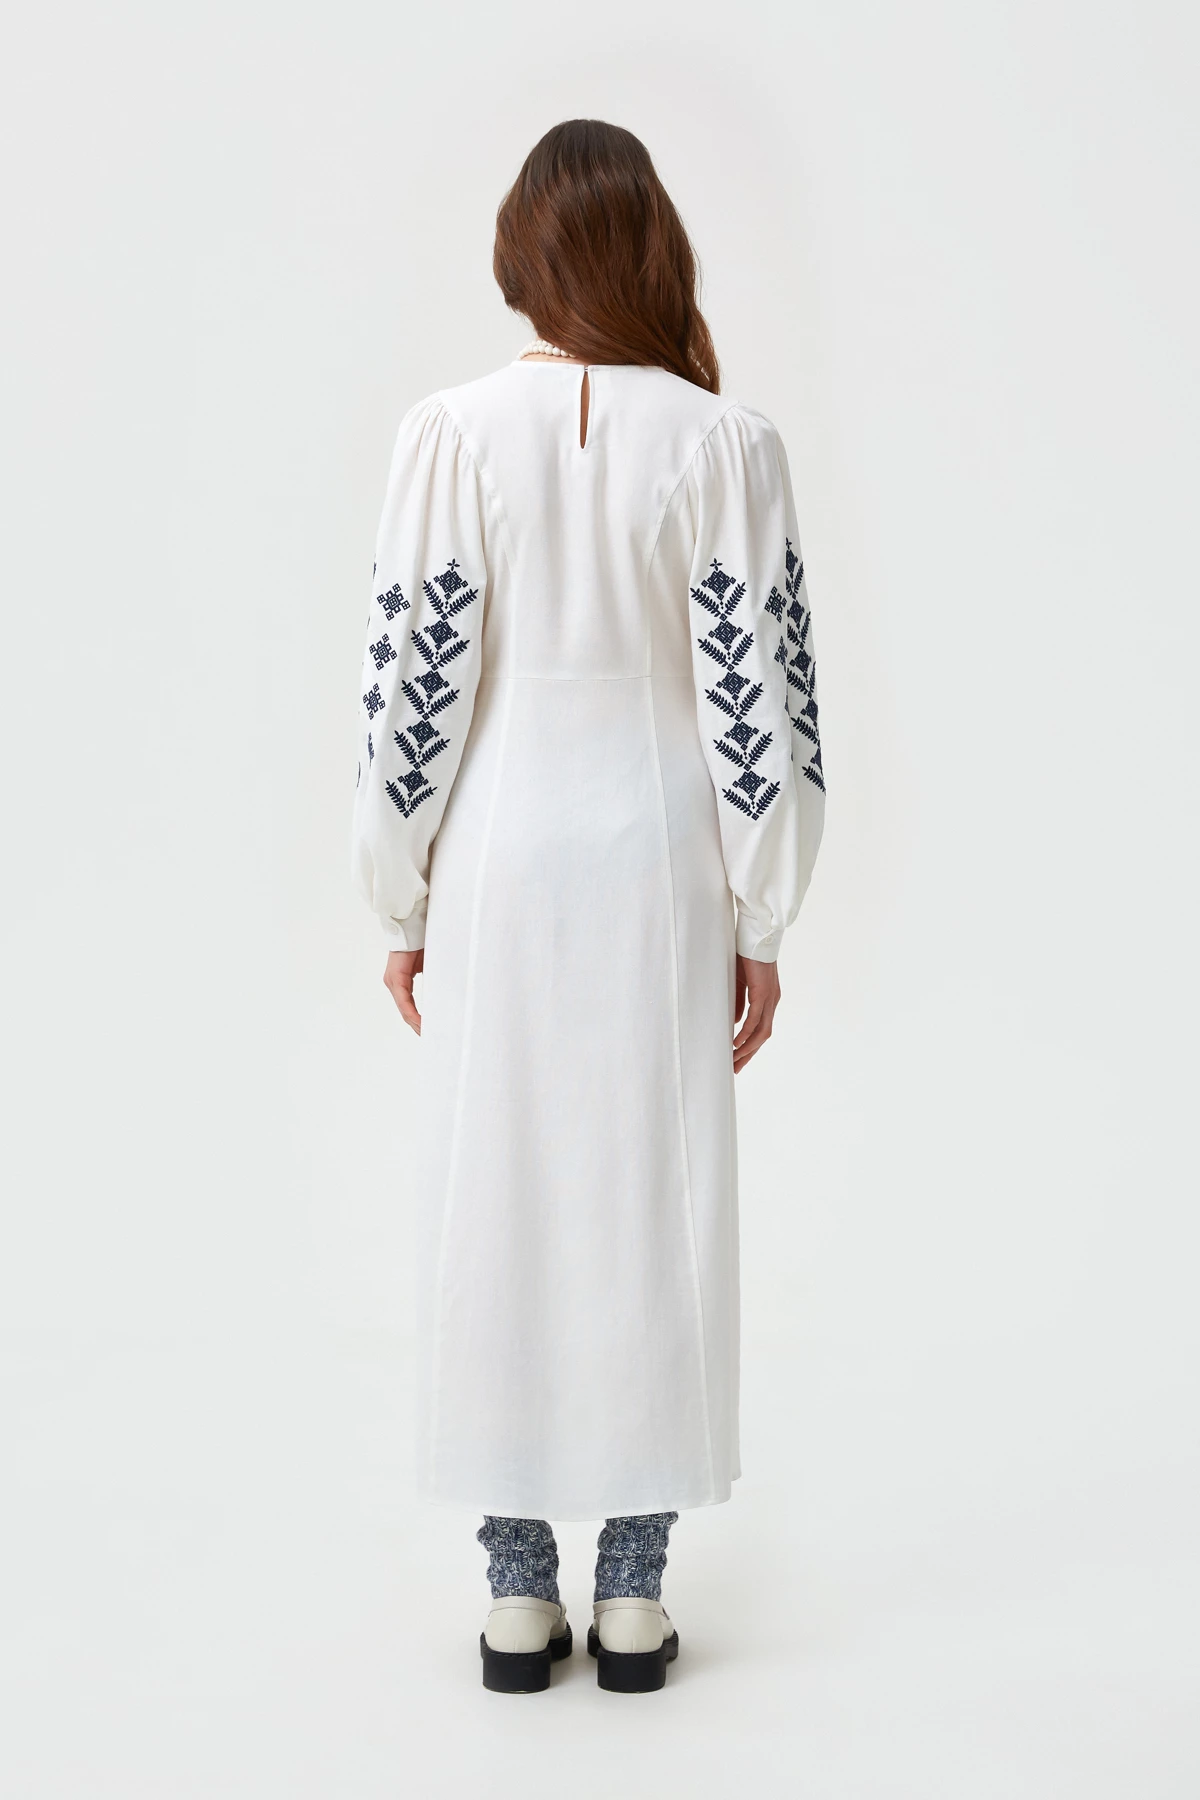 Milky linen vyshyvanka dress with rhombus embroidery, photo 6